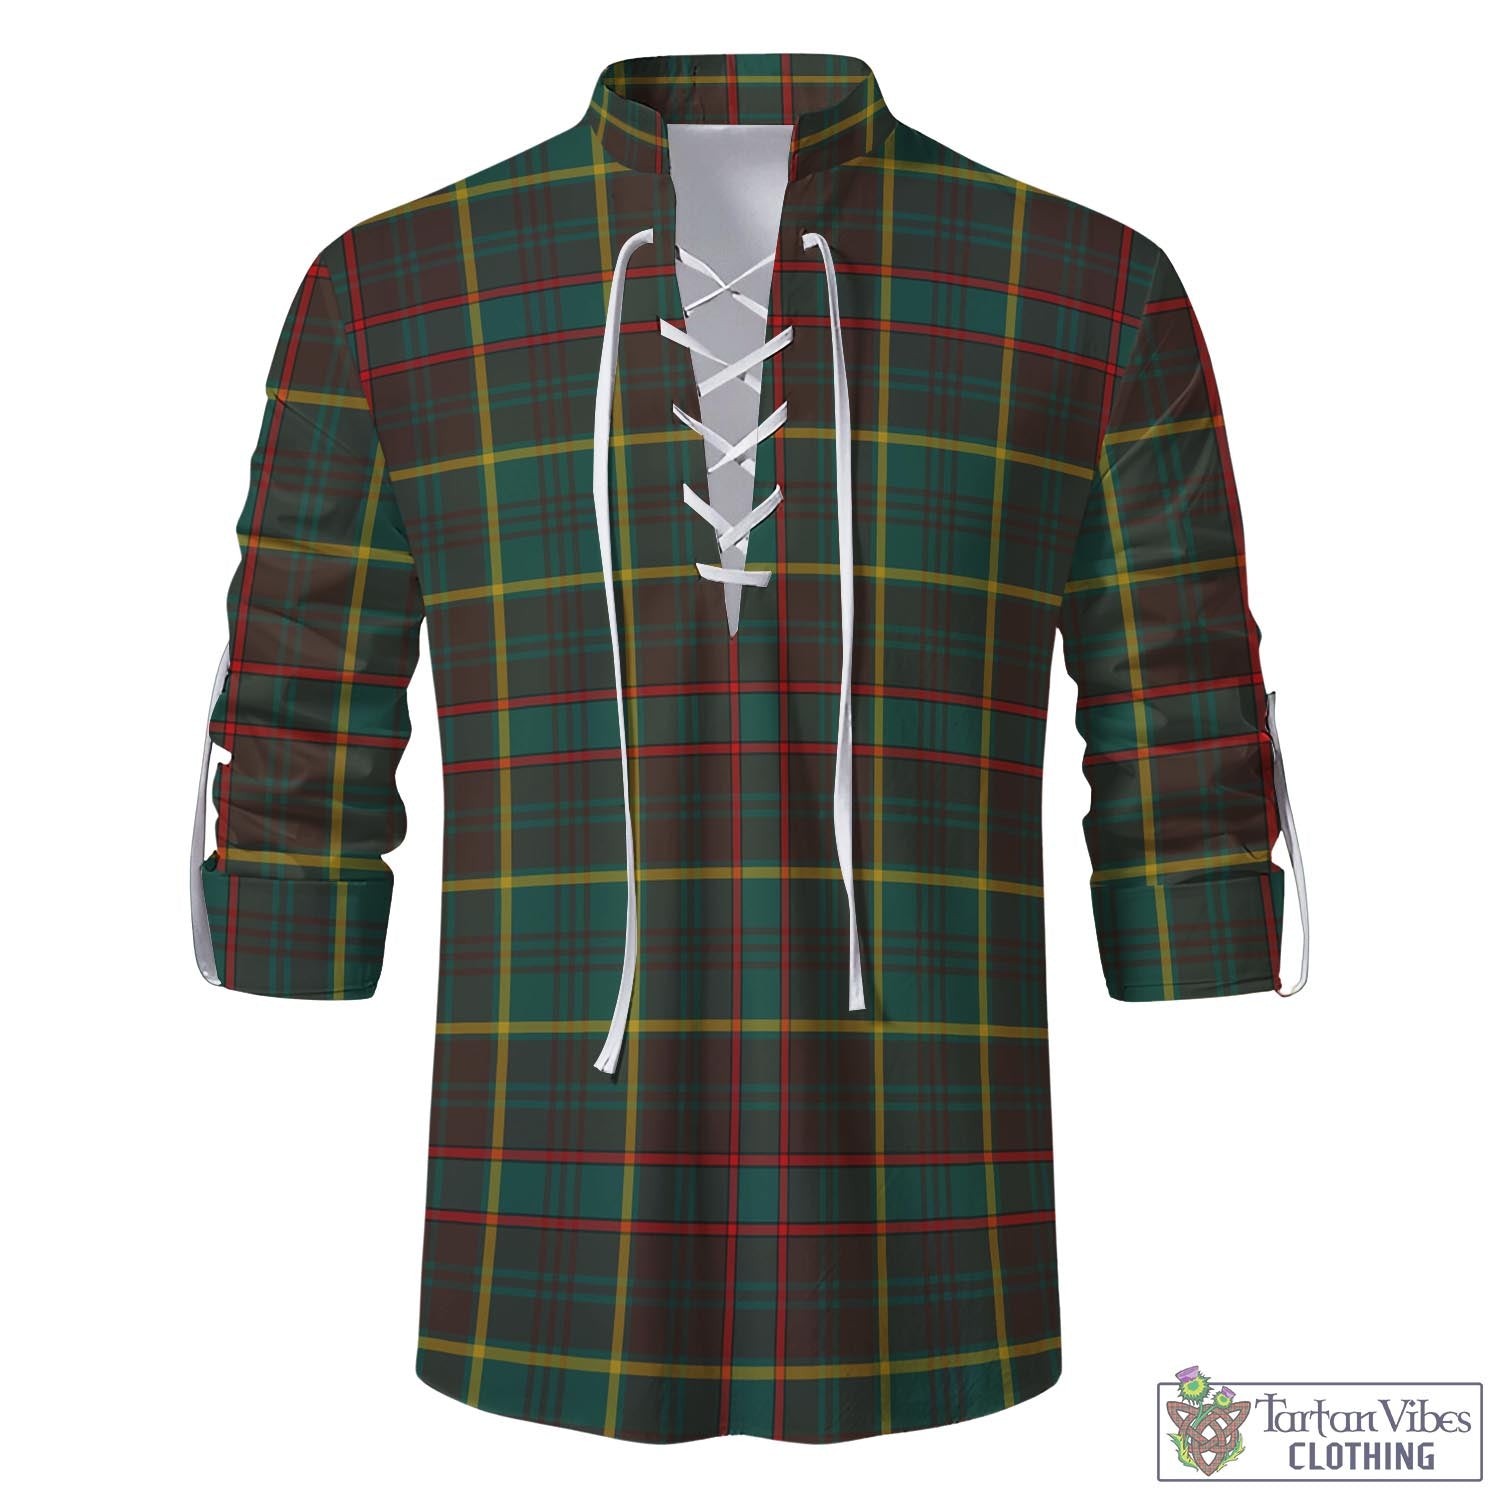 Tartan Vibes Clothing Ontario Province Canada Tartan Men's Scottish Traditional Jacobite Ghillie Kilt Shirt